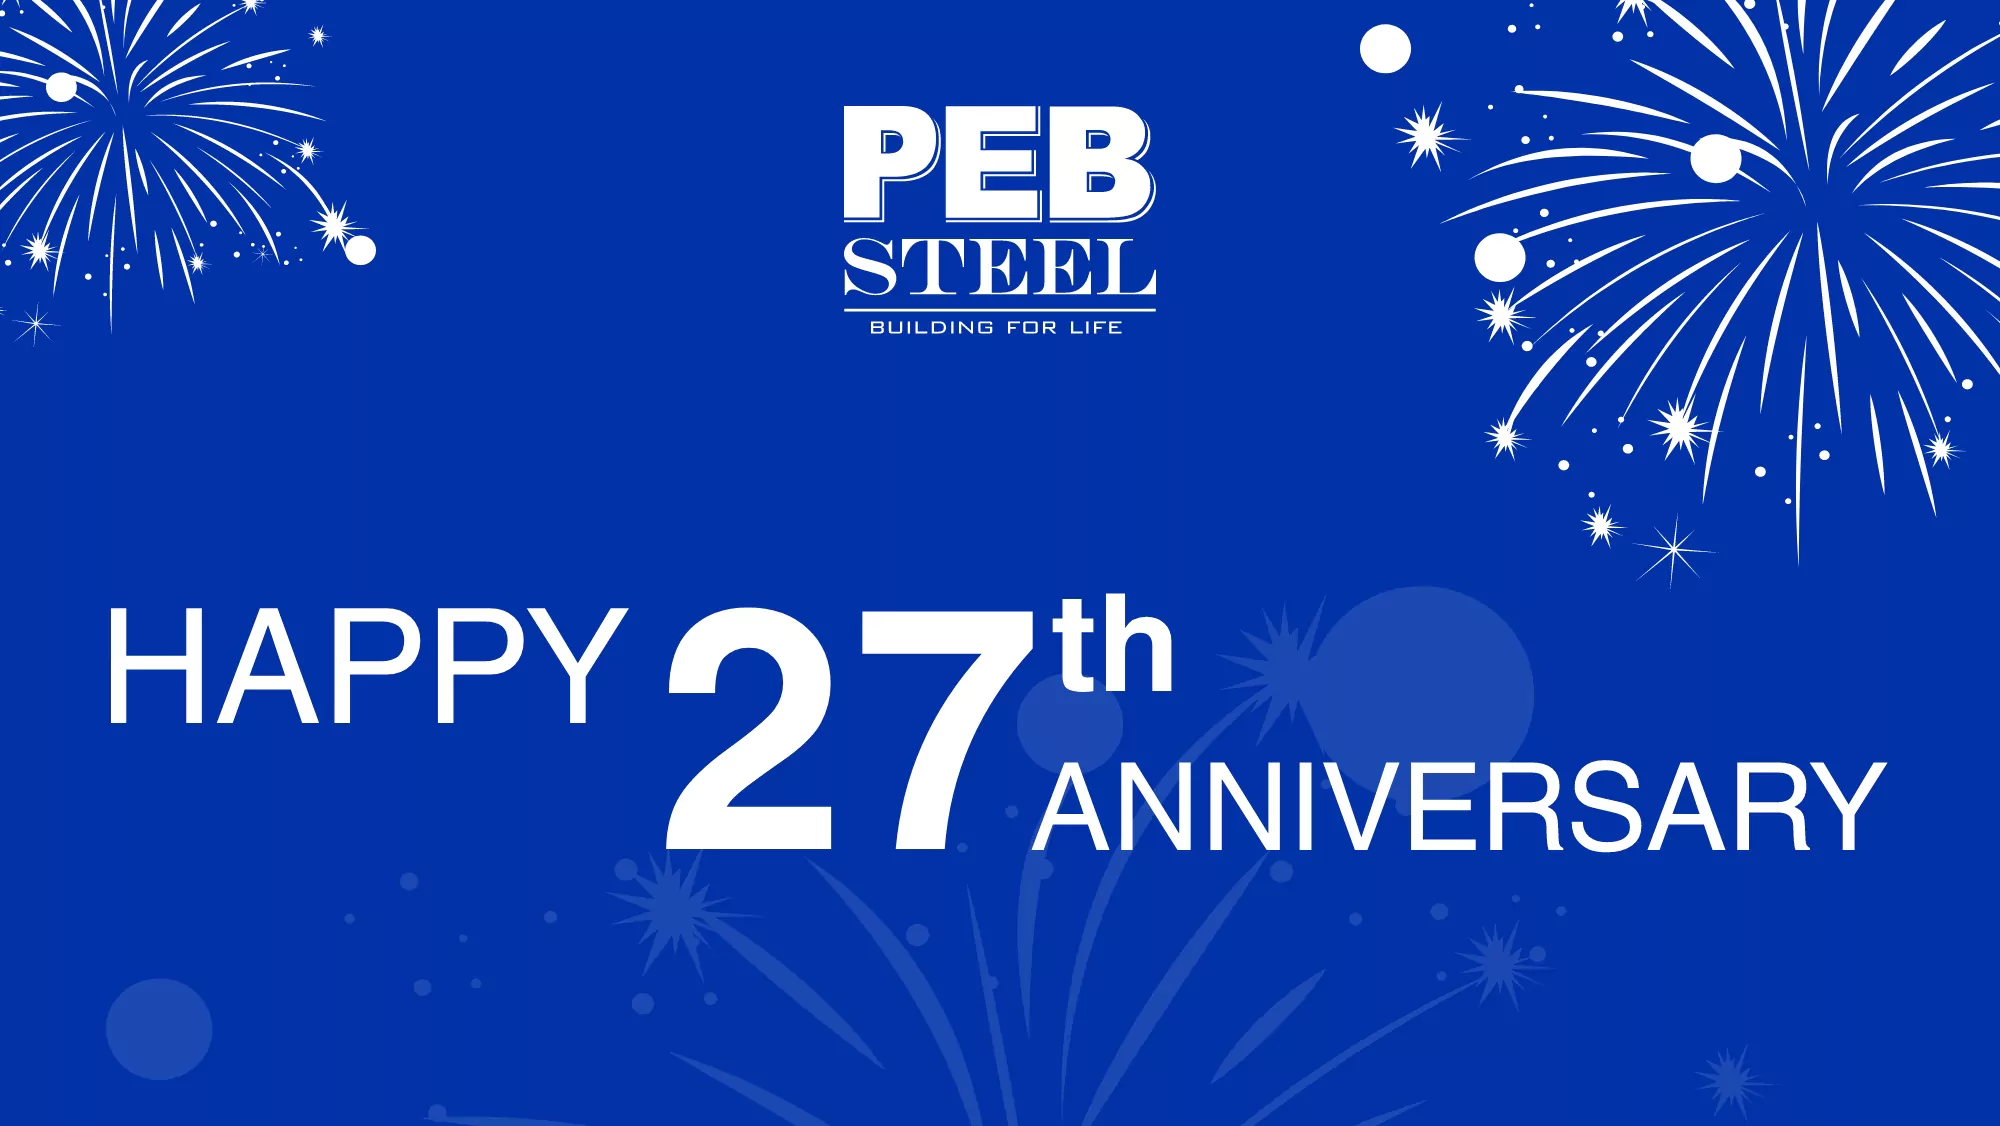 Pebsteel mừng kỷ niệm 27 năm thành lập